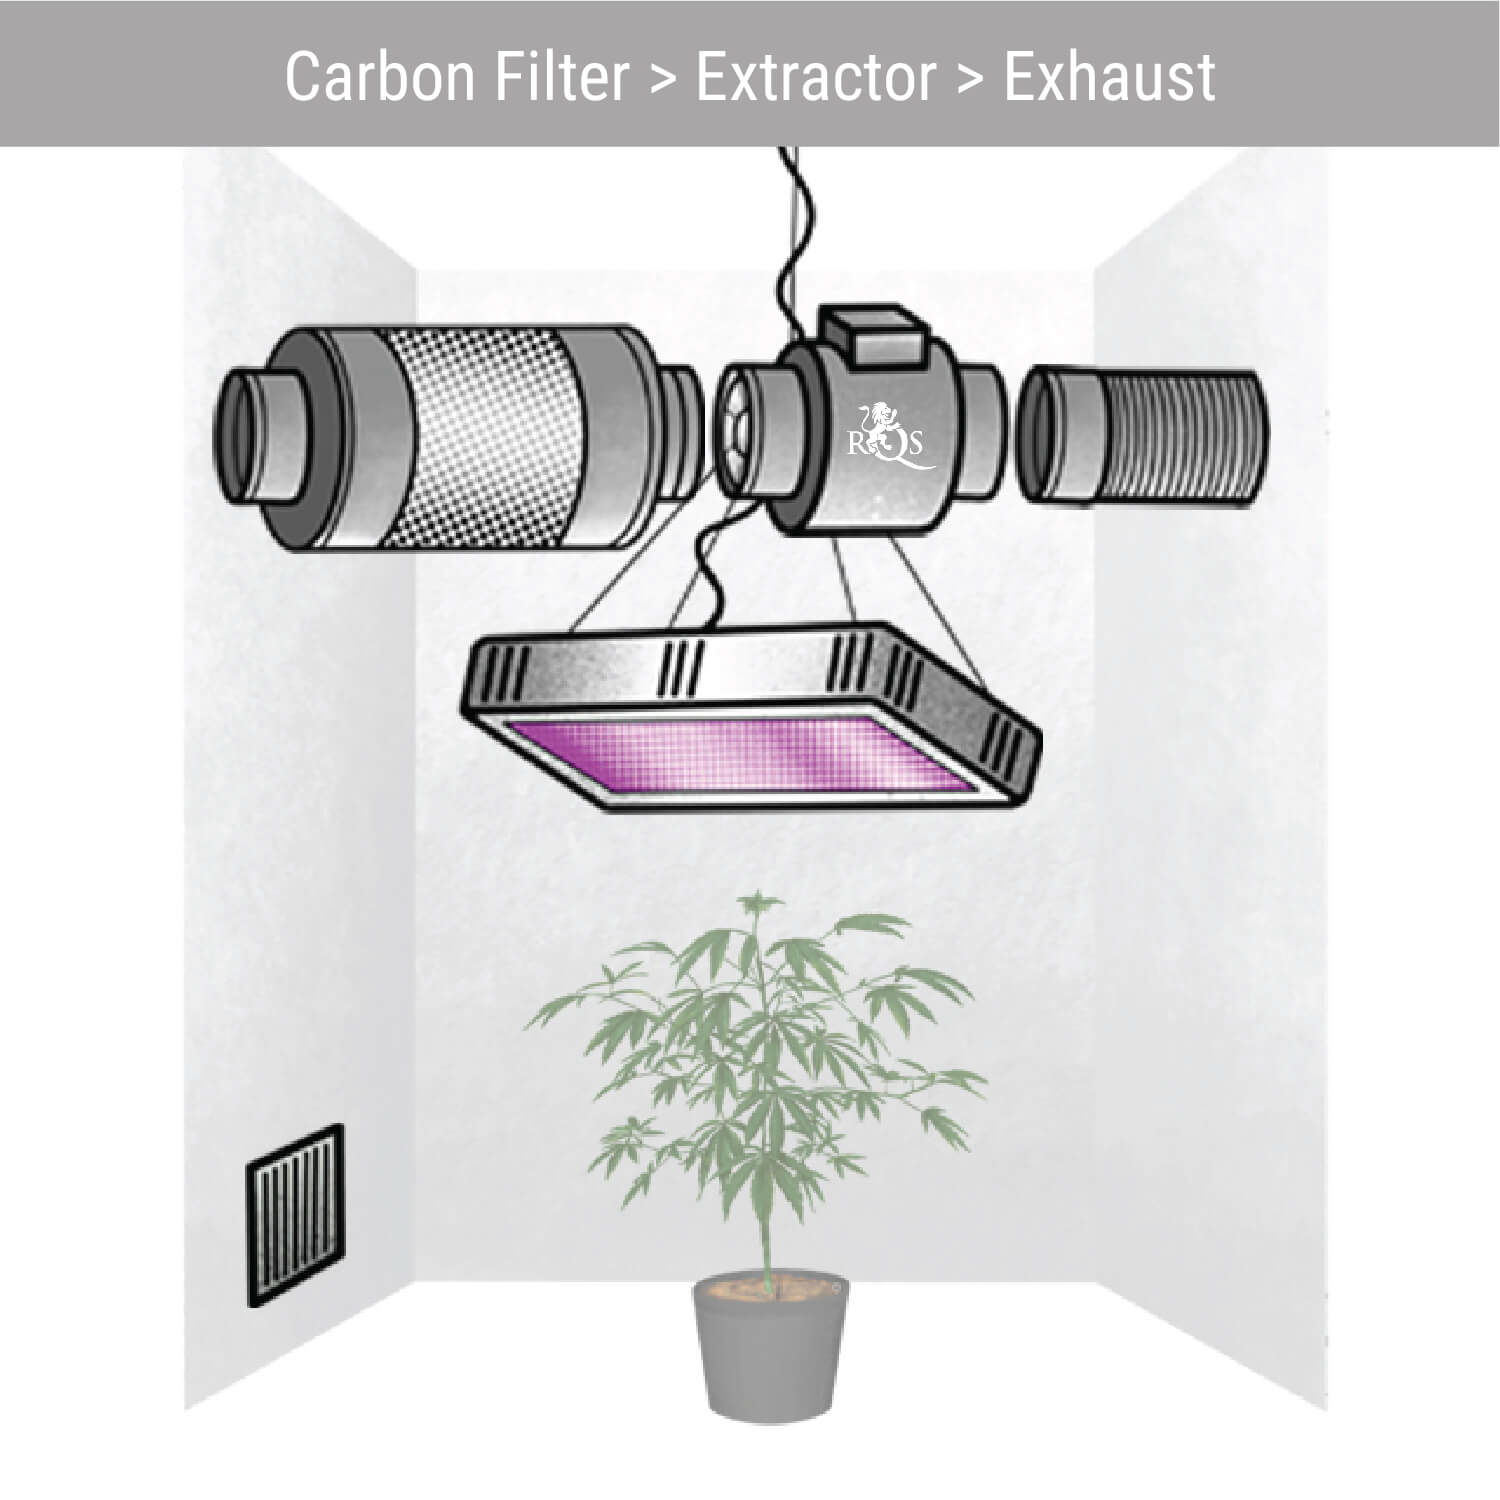 Carbon Filter > Extractor > Exhaust